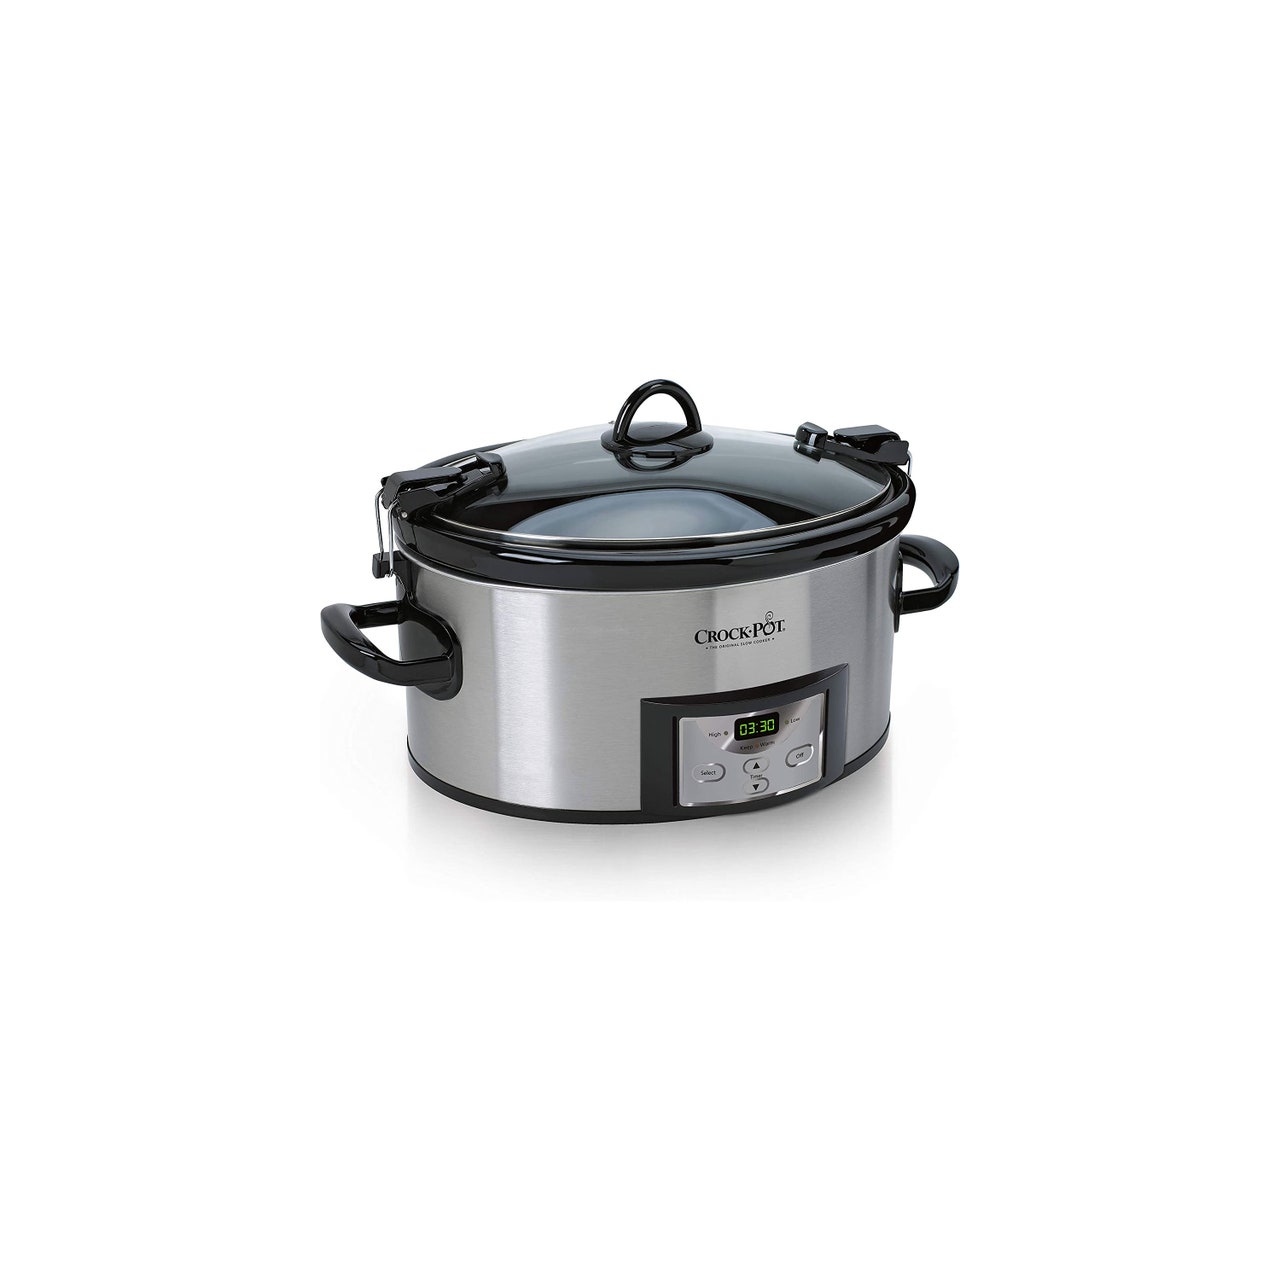 Crock-Pot Cook & Carry programmierbarer Schongarer